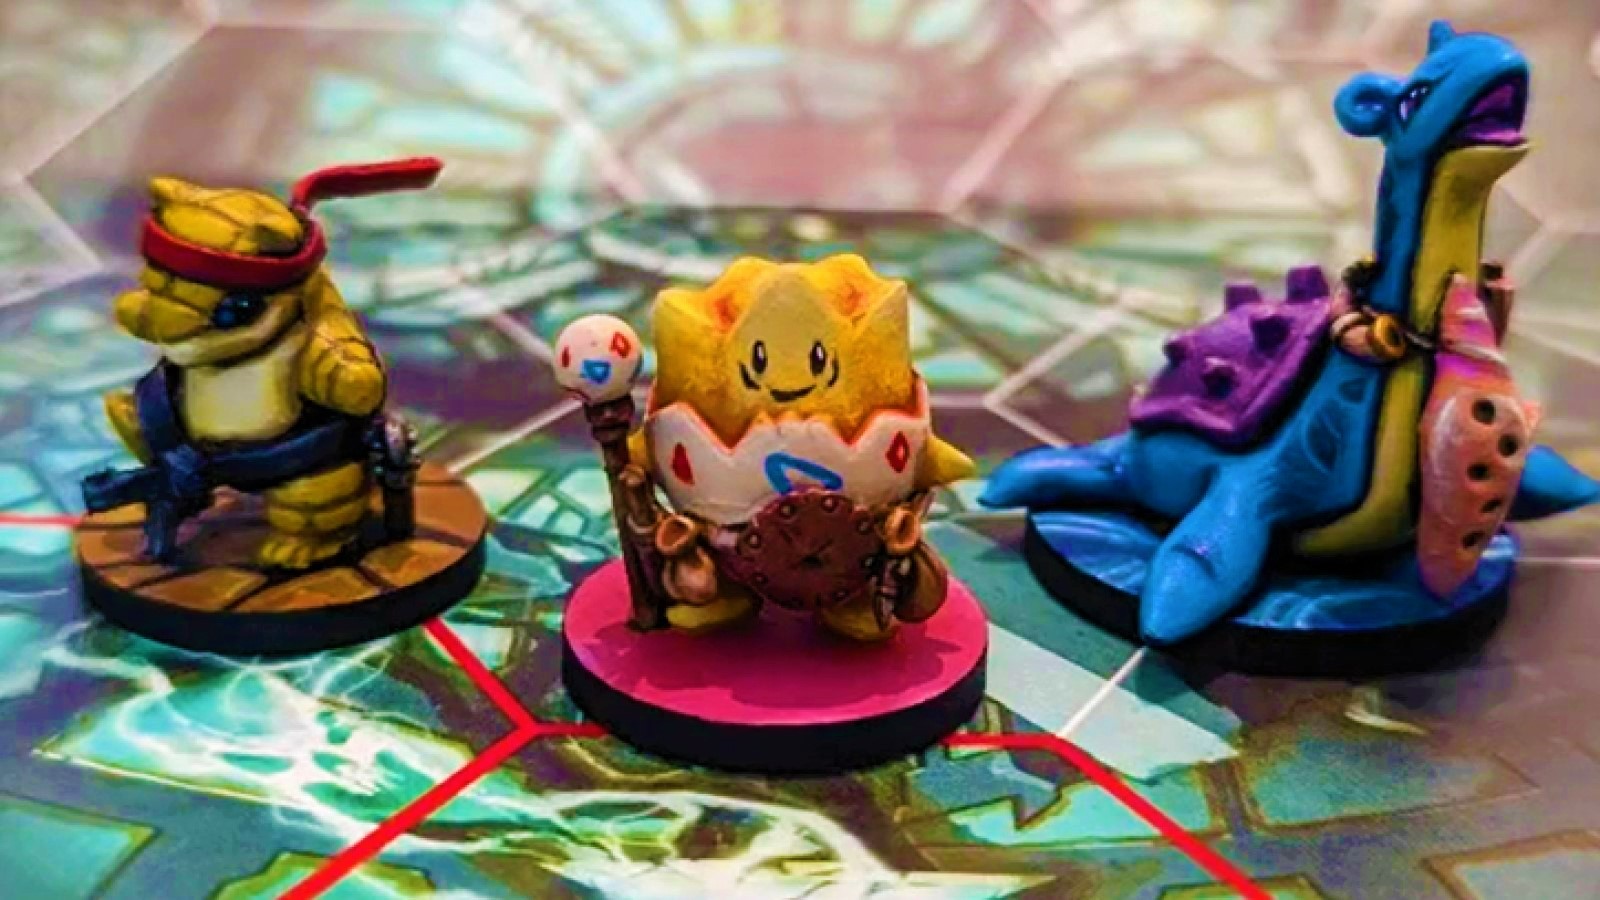 WestEndGames-Magic the Gathering, Board Games, Pokémon, D&D, Minis